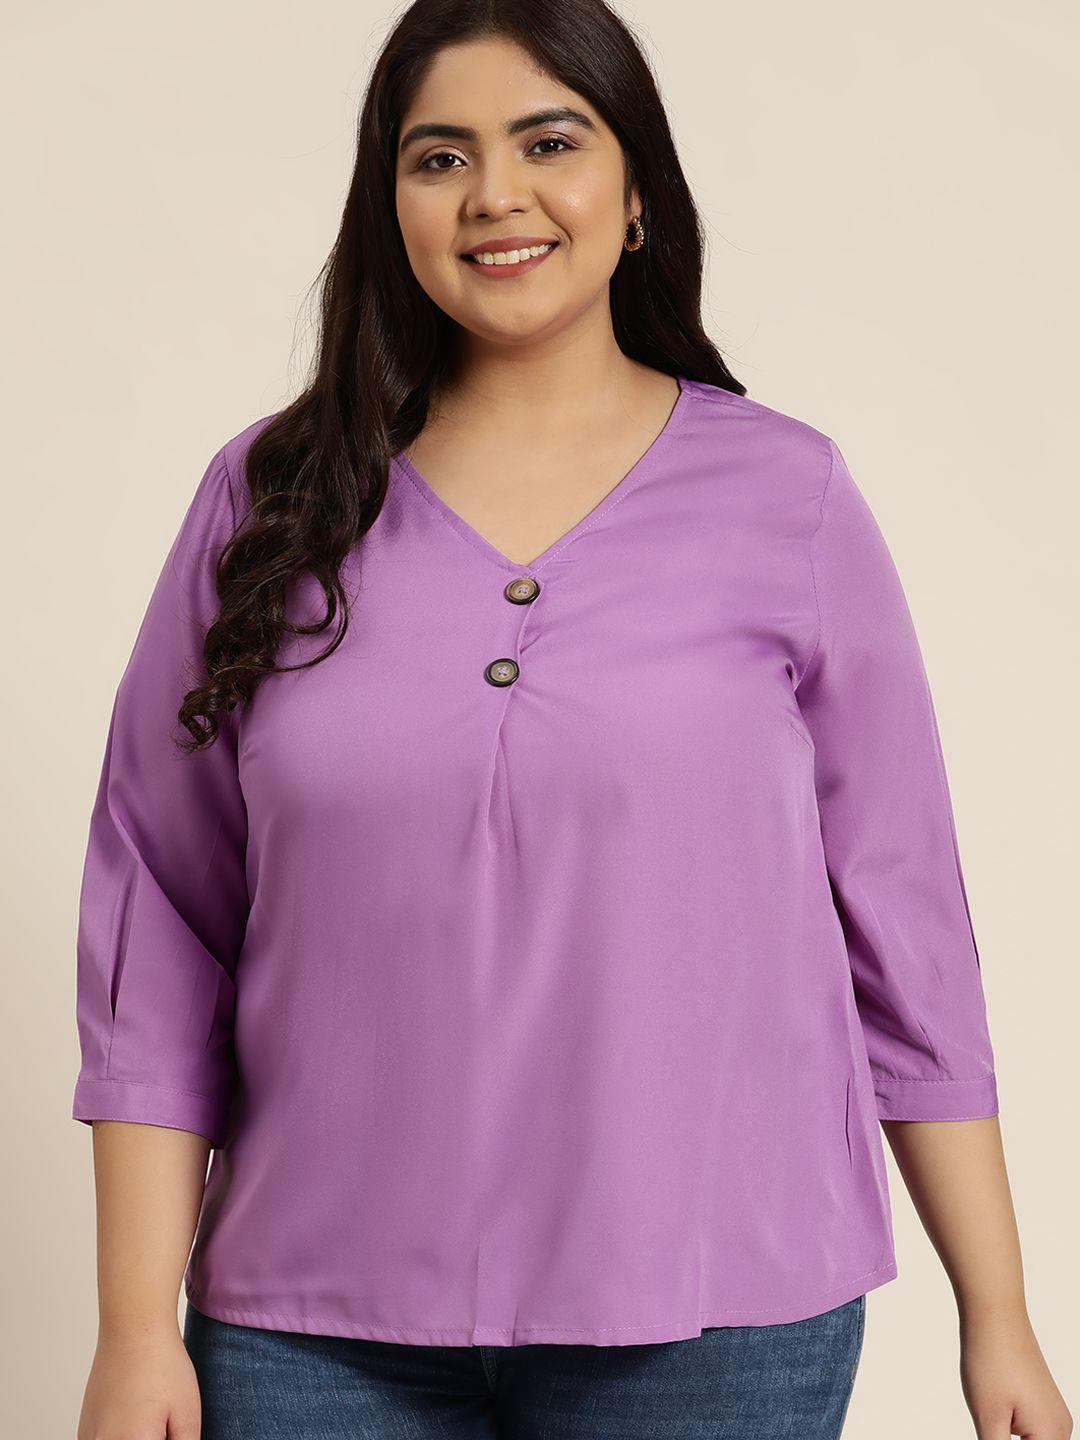 sztori women plus size purple solid top